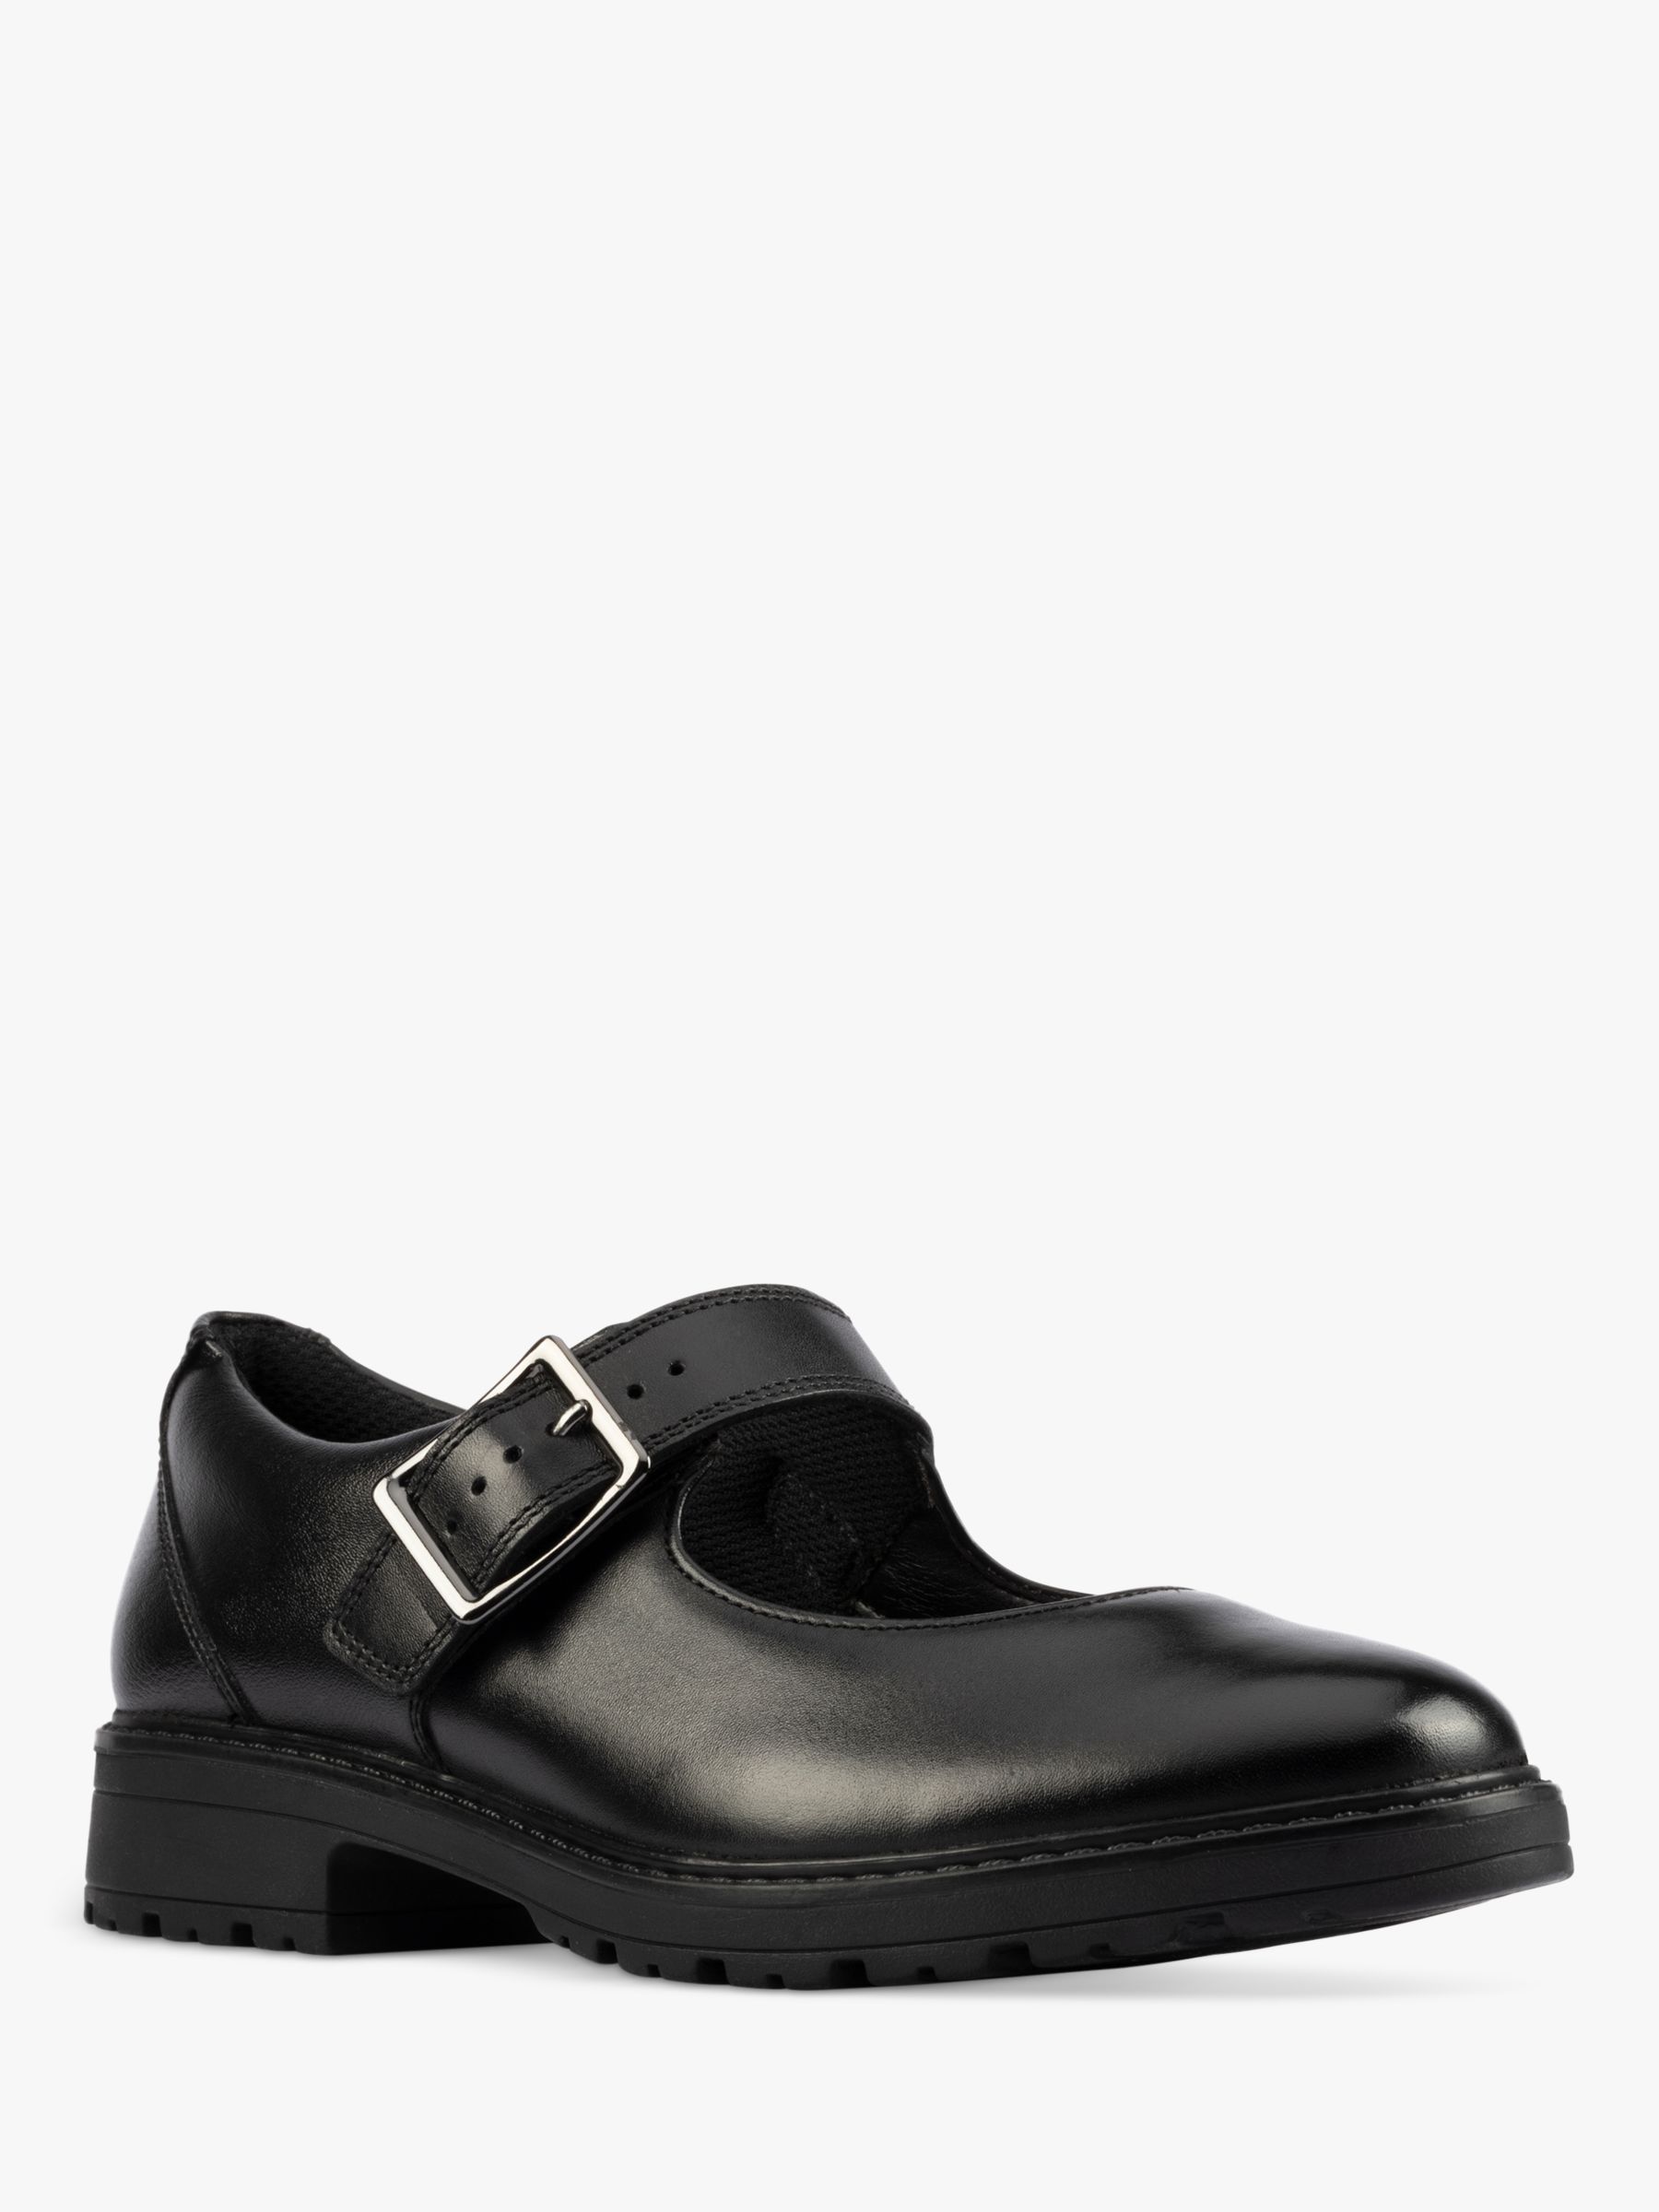 Clarks Kids' Loxham Walk Buckle Leather School Shoes, Black, 3F